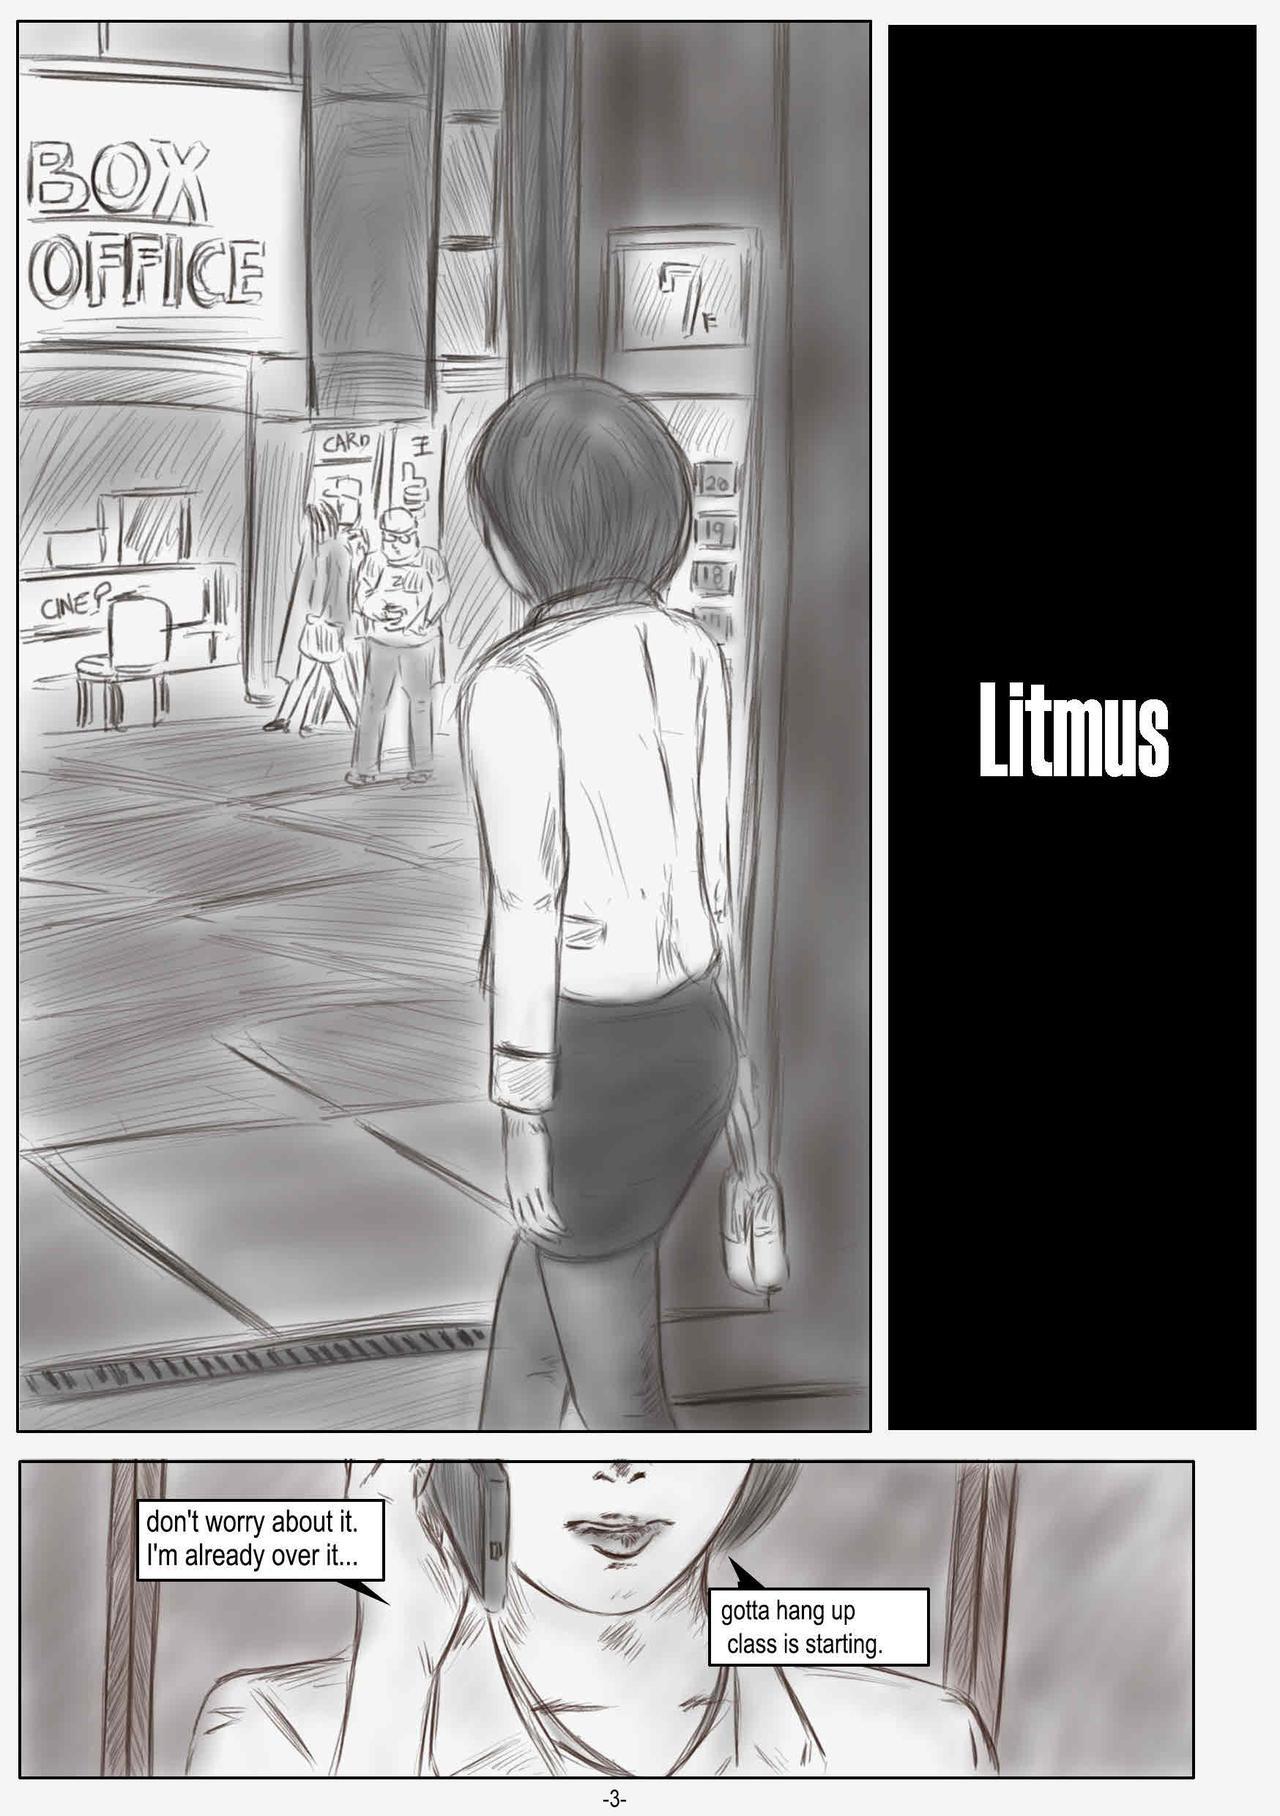 Staxxx Litmus - Complete Edition Negra - Page 5